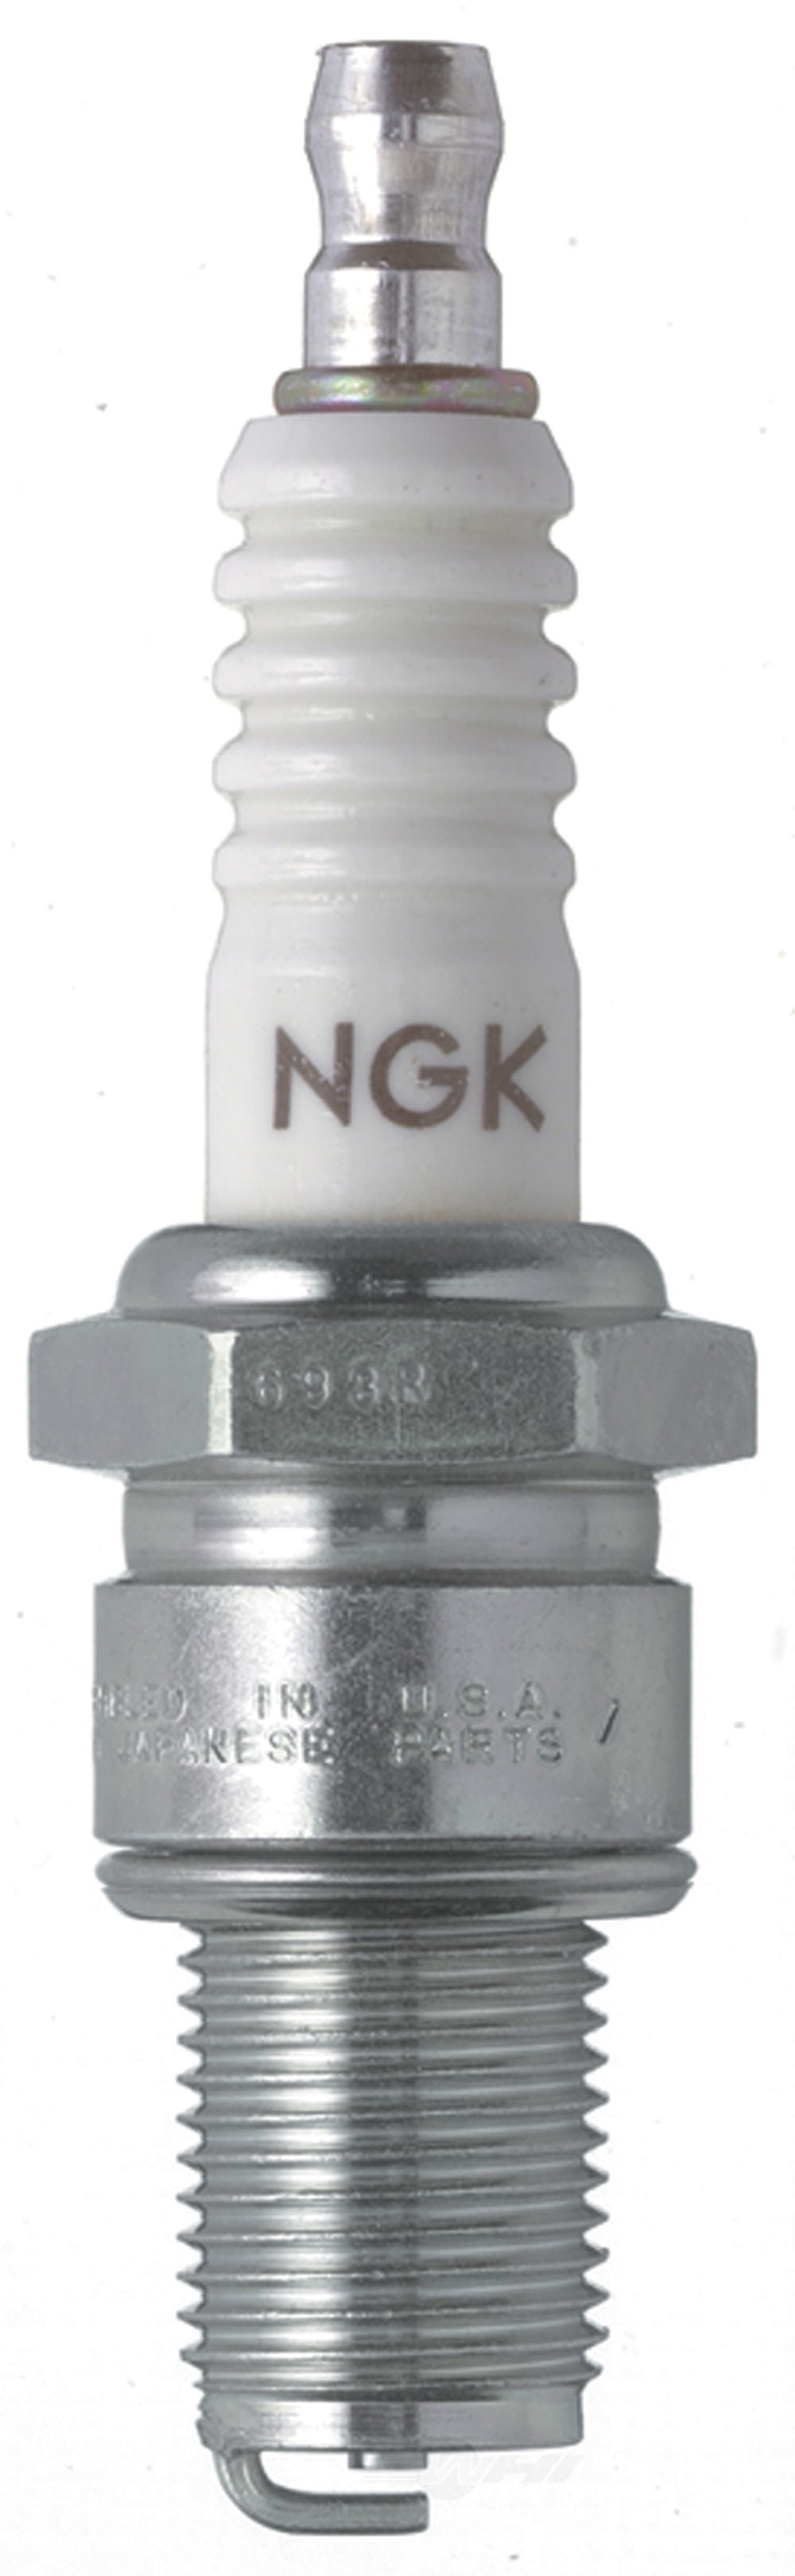 DPR6EA-9 Stock #5531 12 Pack Standard Spark Plugs by NGK Threaded Stud 